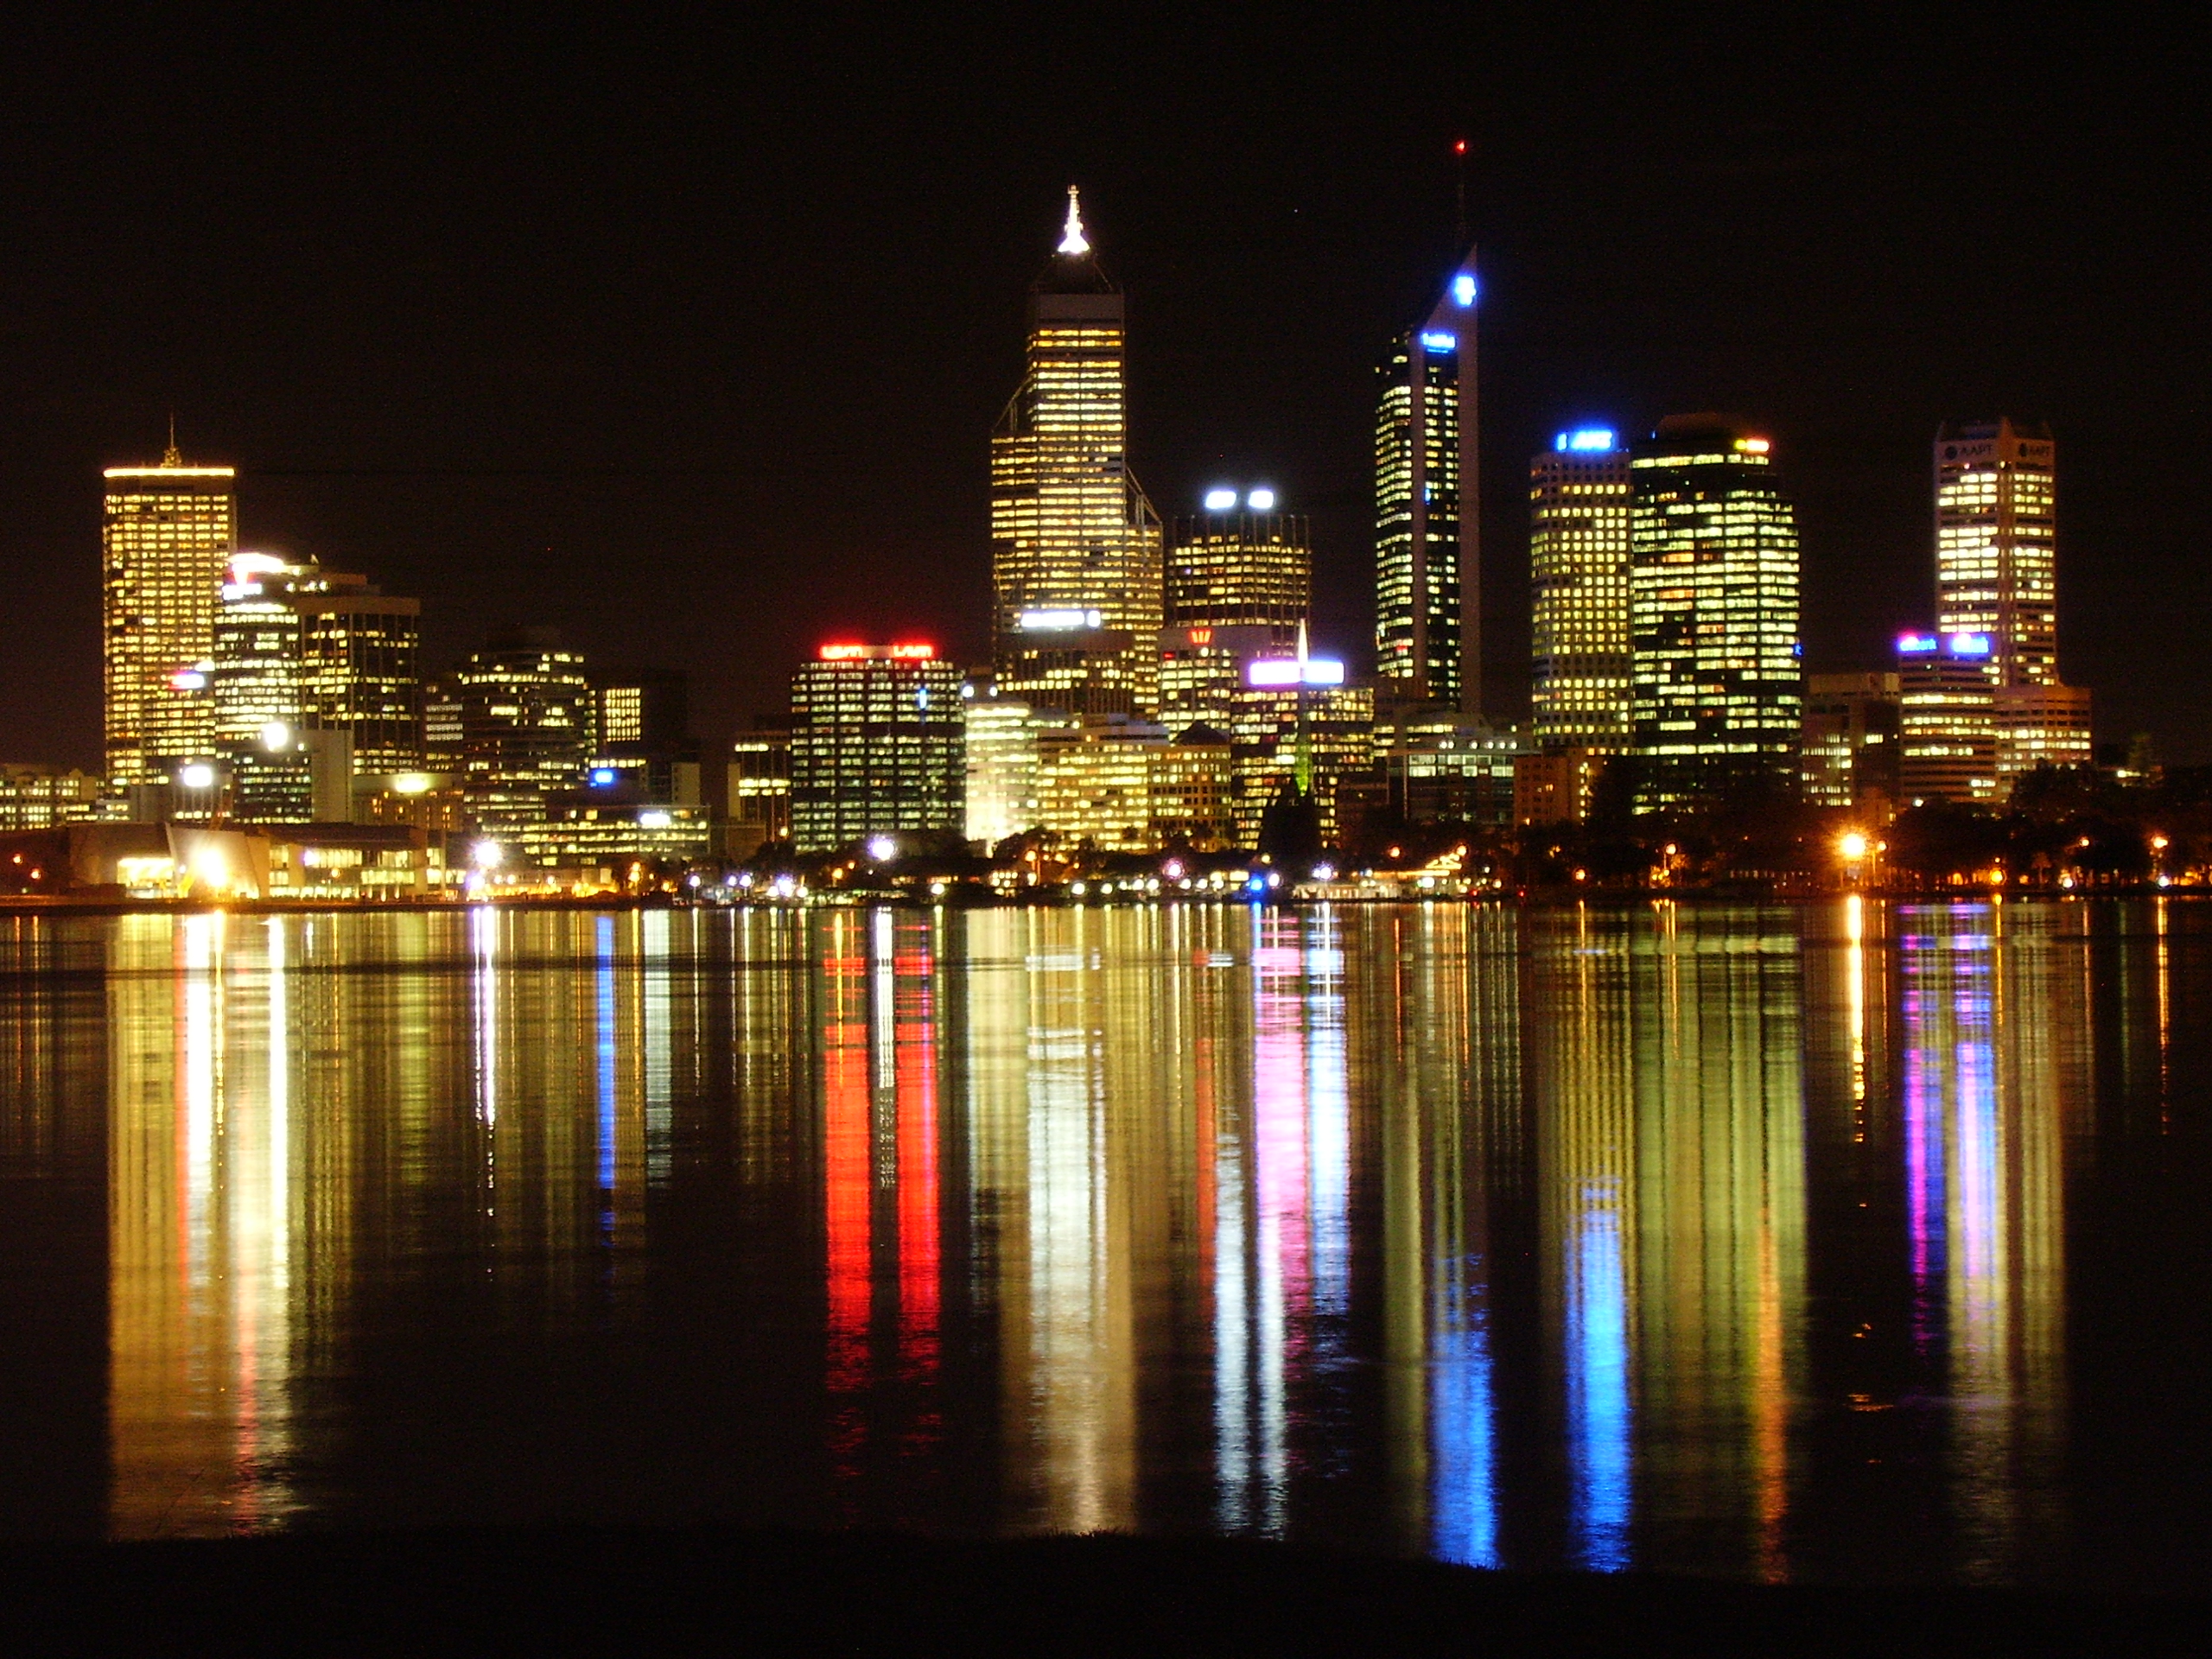 File:Perth skyline at night.jpg - Wikimedia Commons